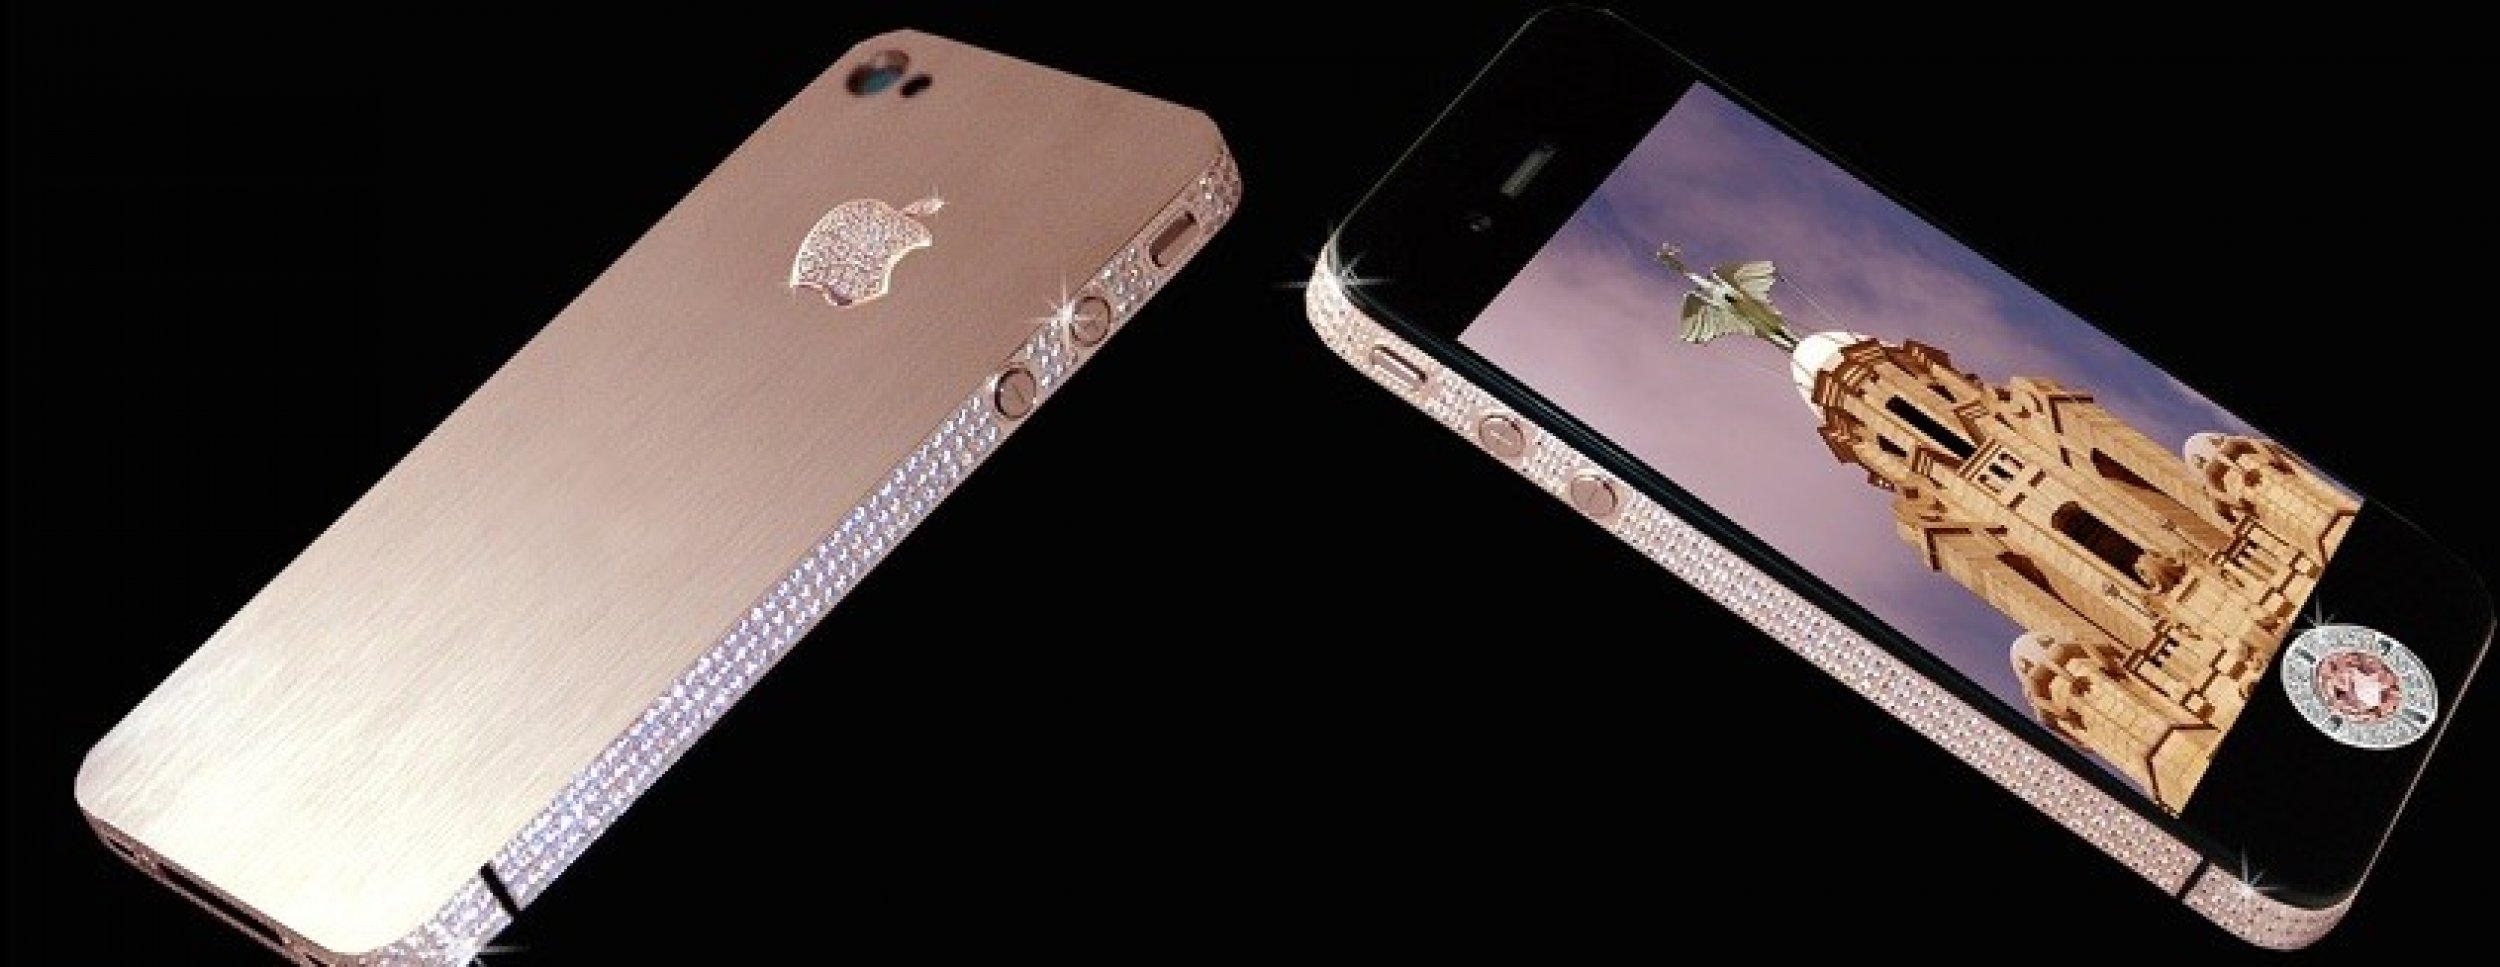 iPhone 4 Diamond Rose Edition  